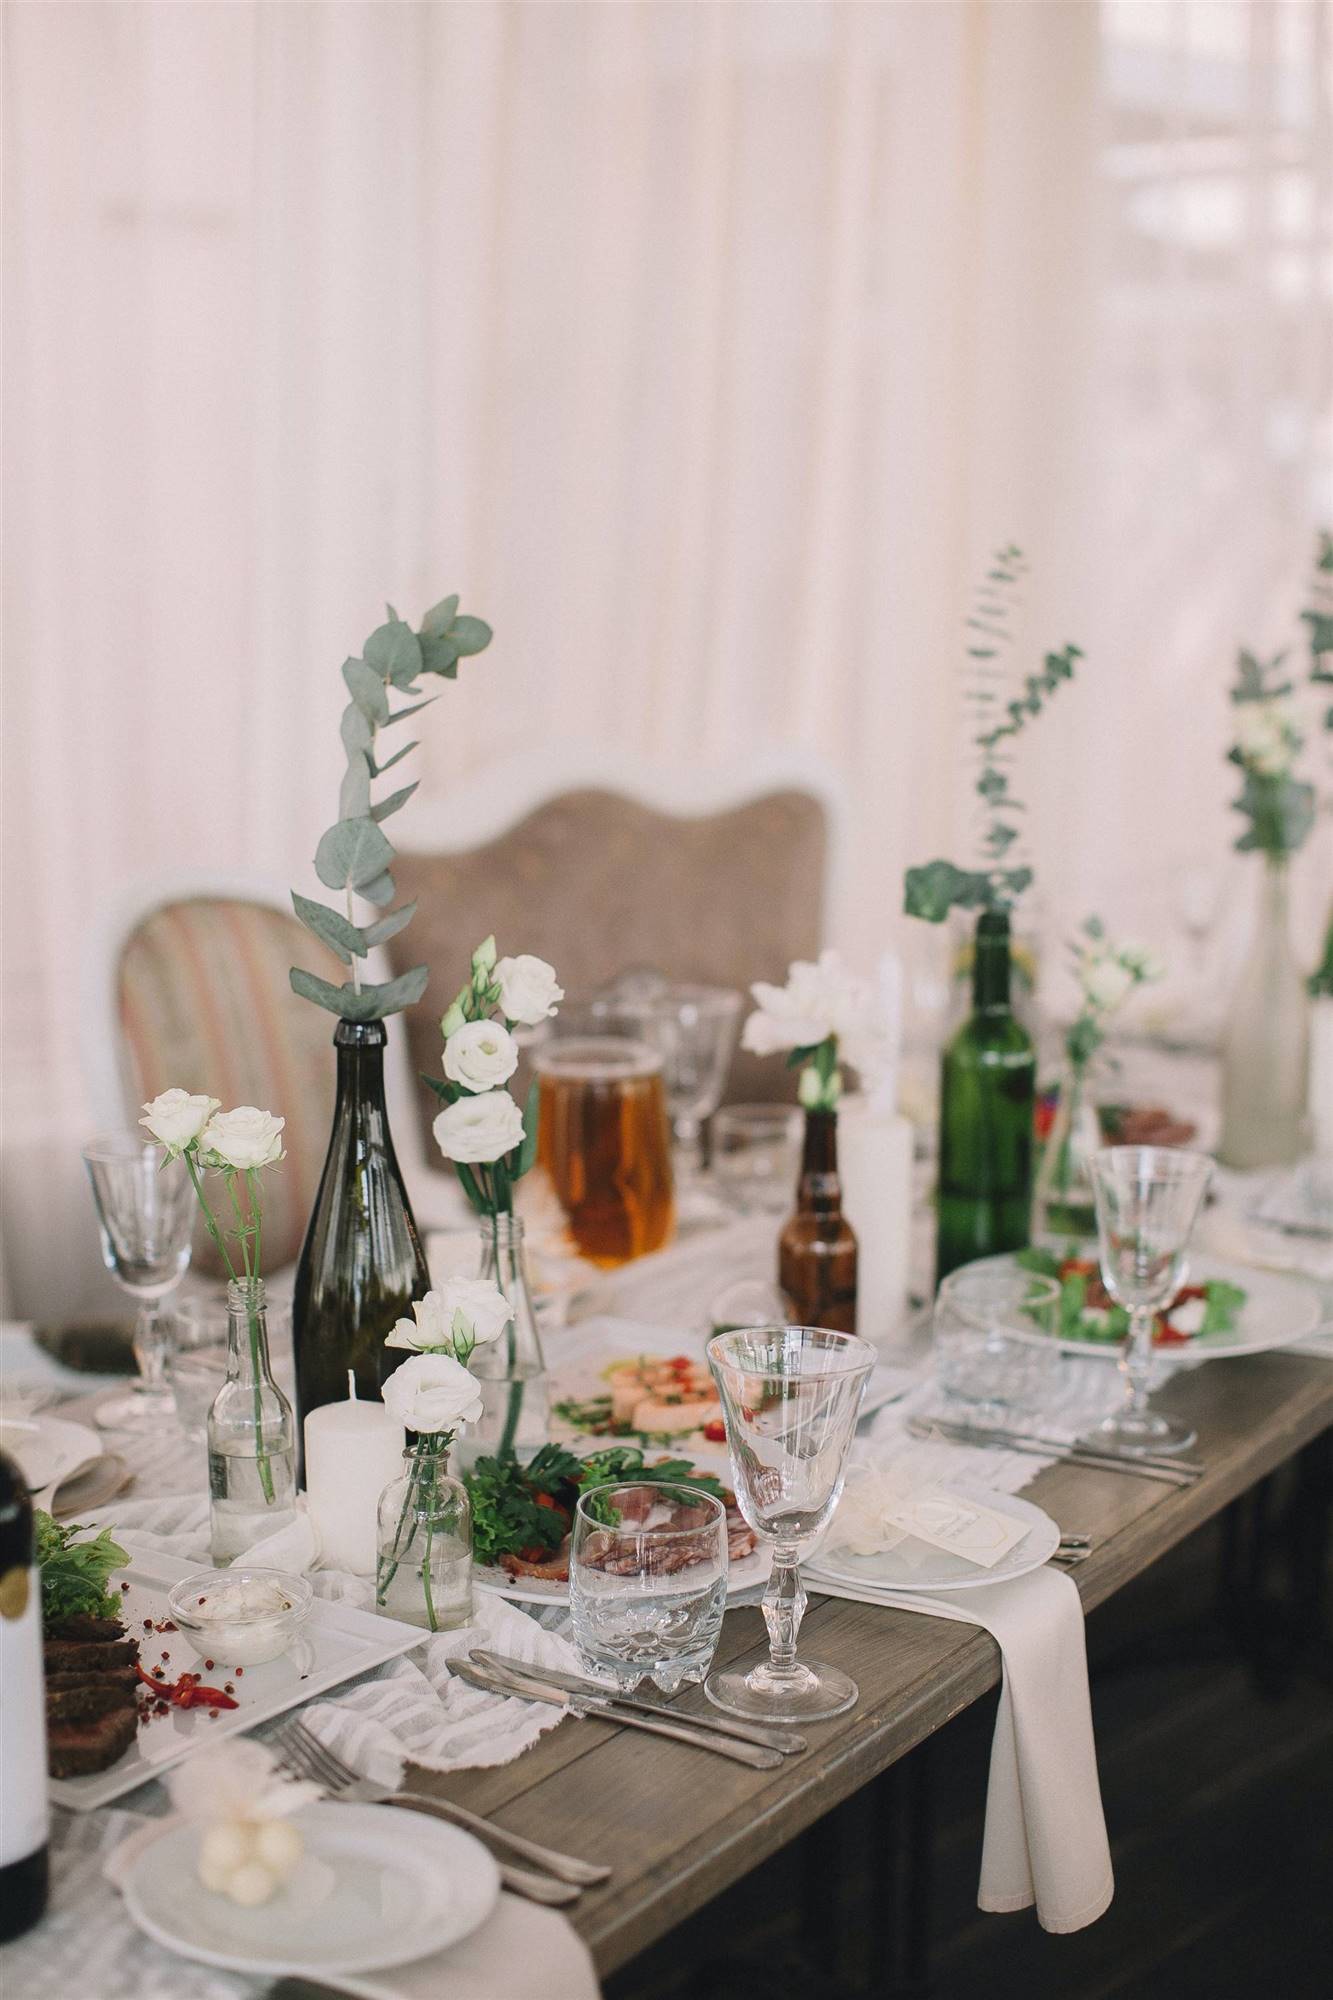 Decorar mesas de boda con botellas de cristal.